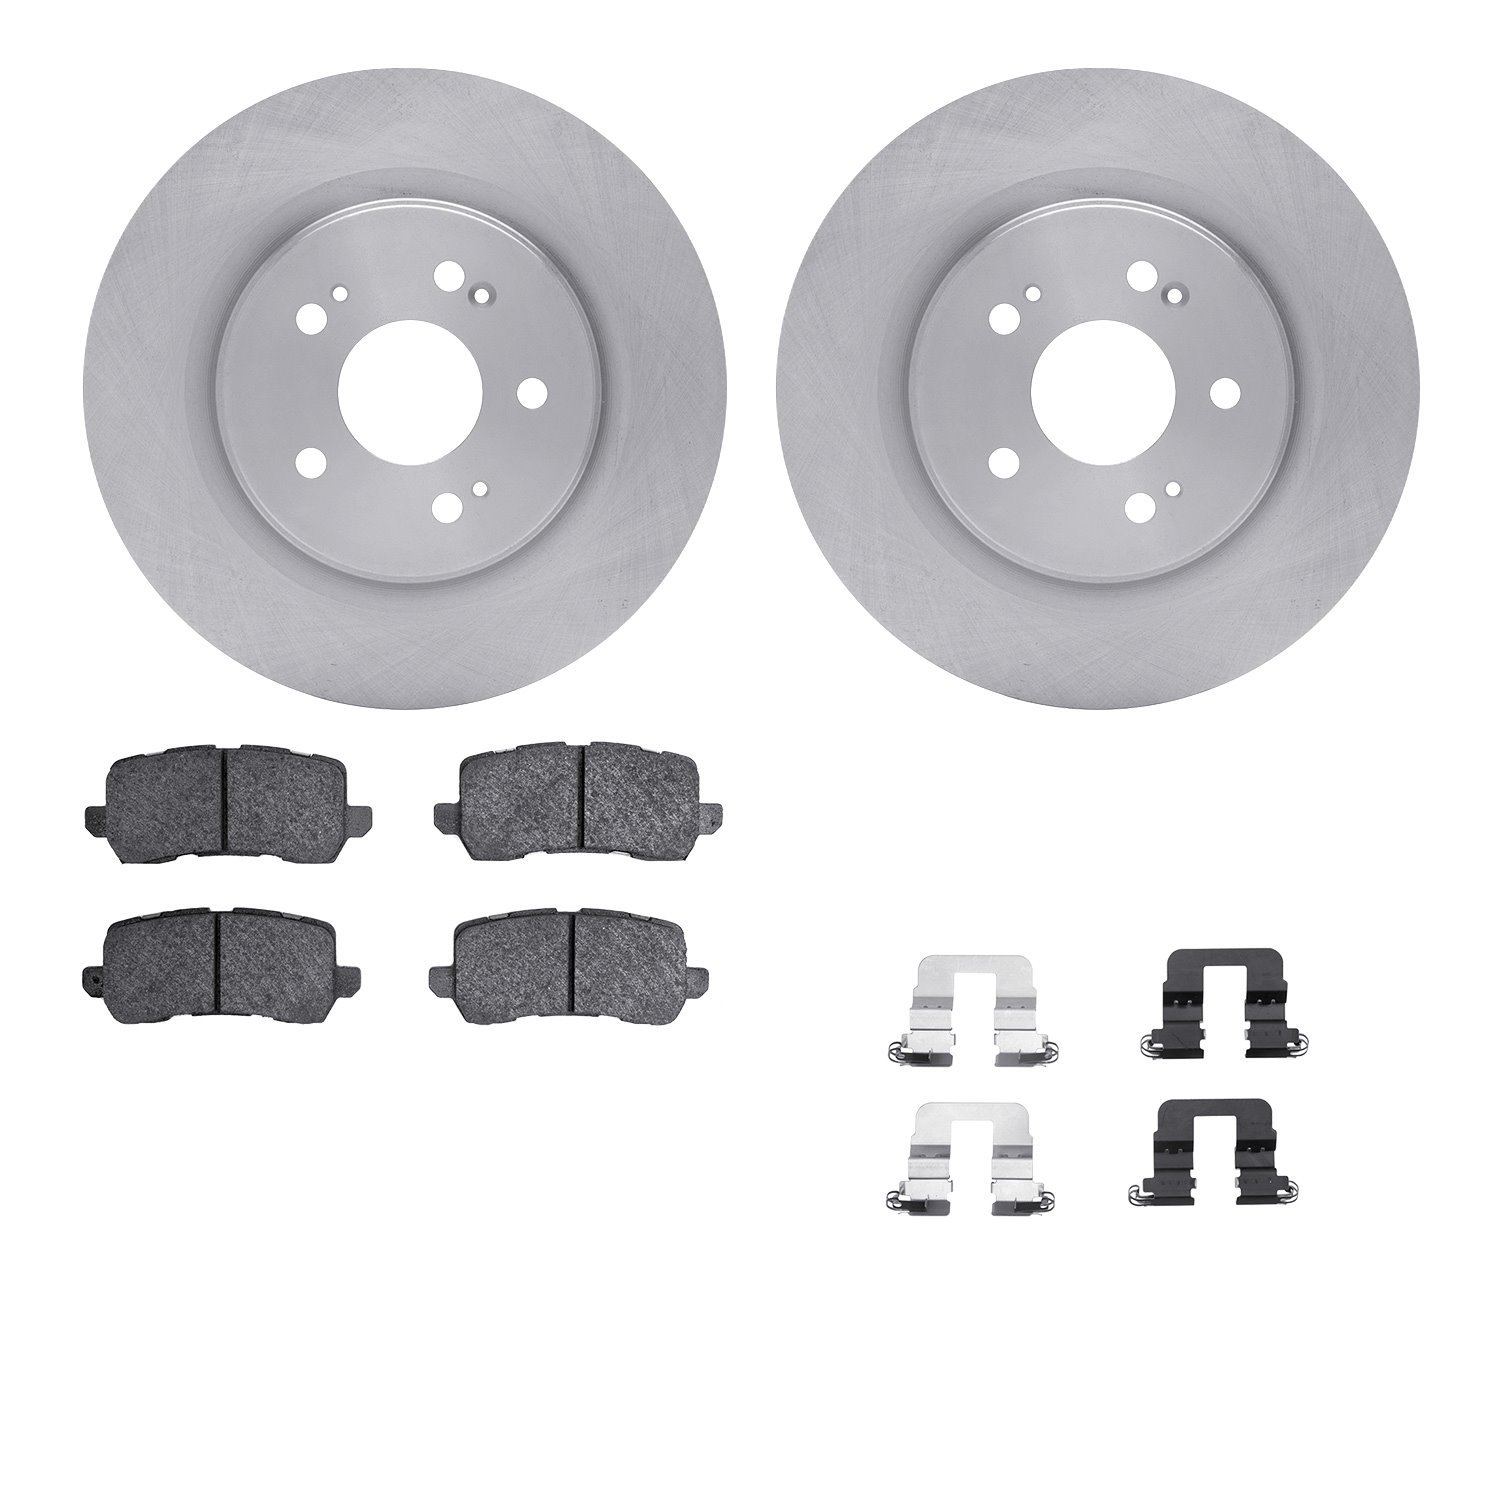 6512-59498 Brake Rotors w/5000 Advanced Brake Pads Kit with Hardware, Fits Select Acura/Honda, Position: Rear